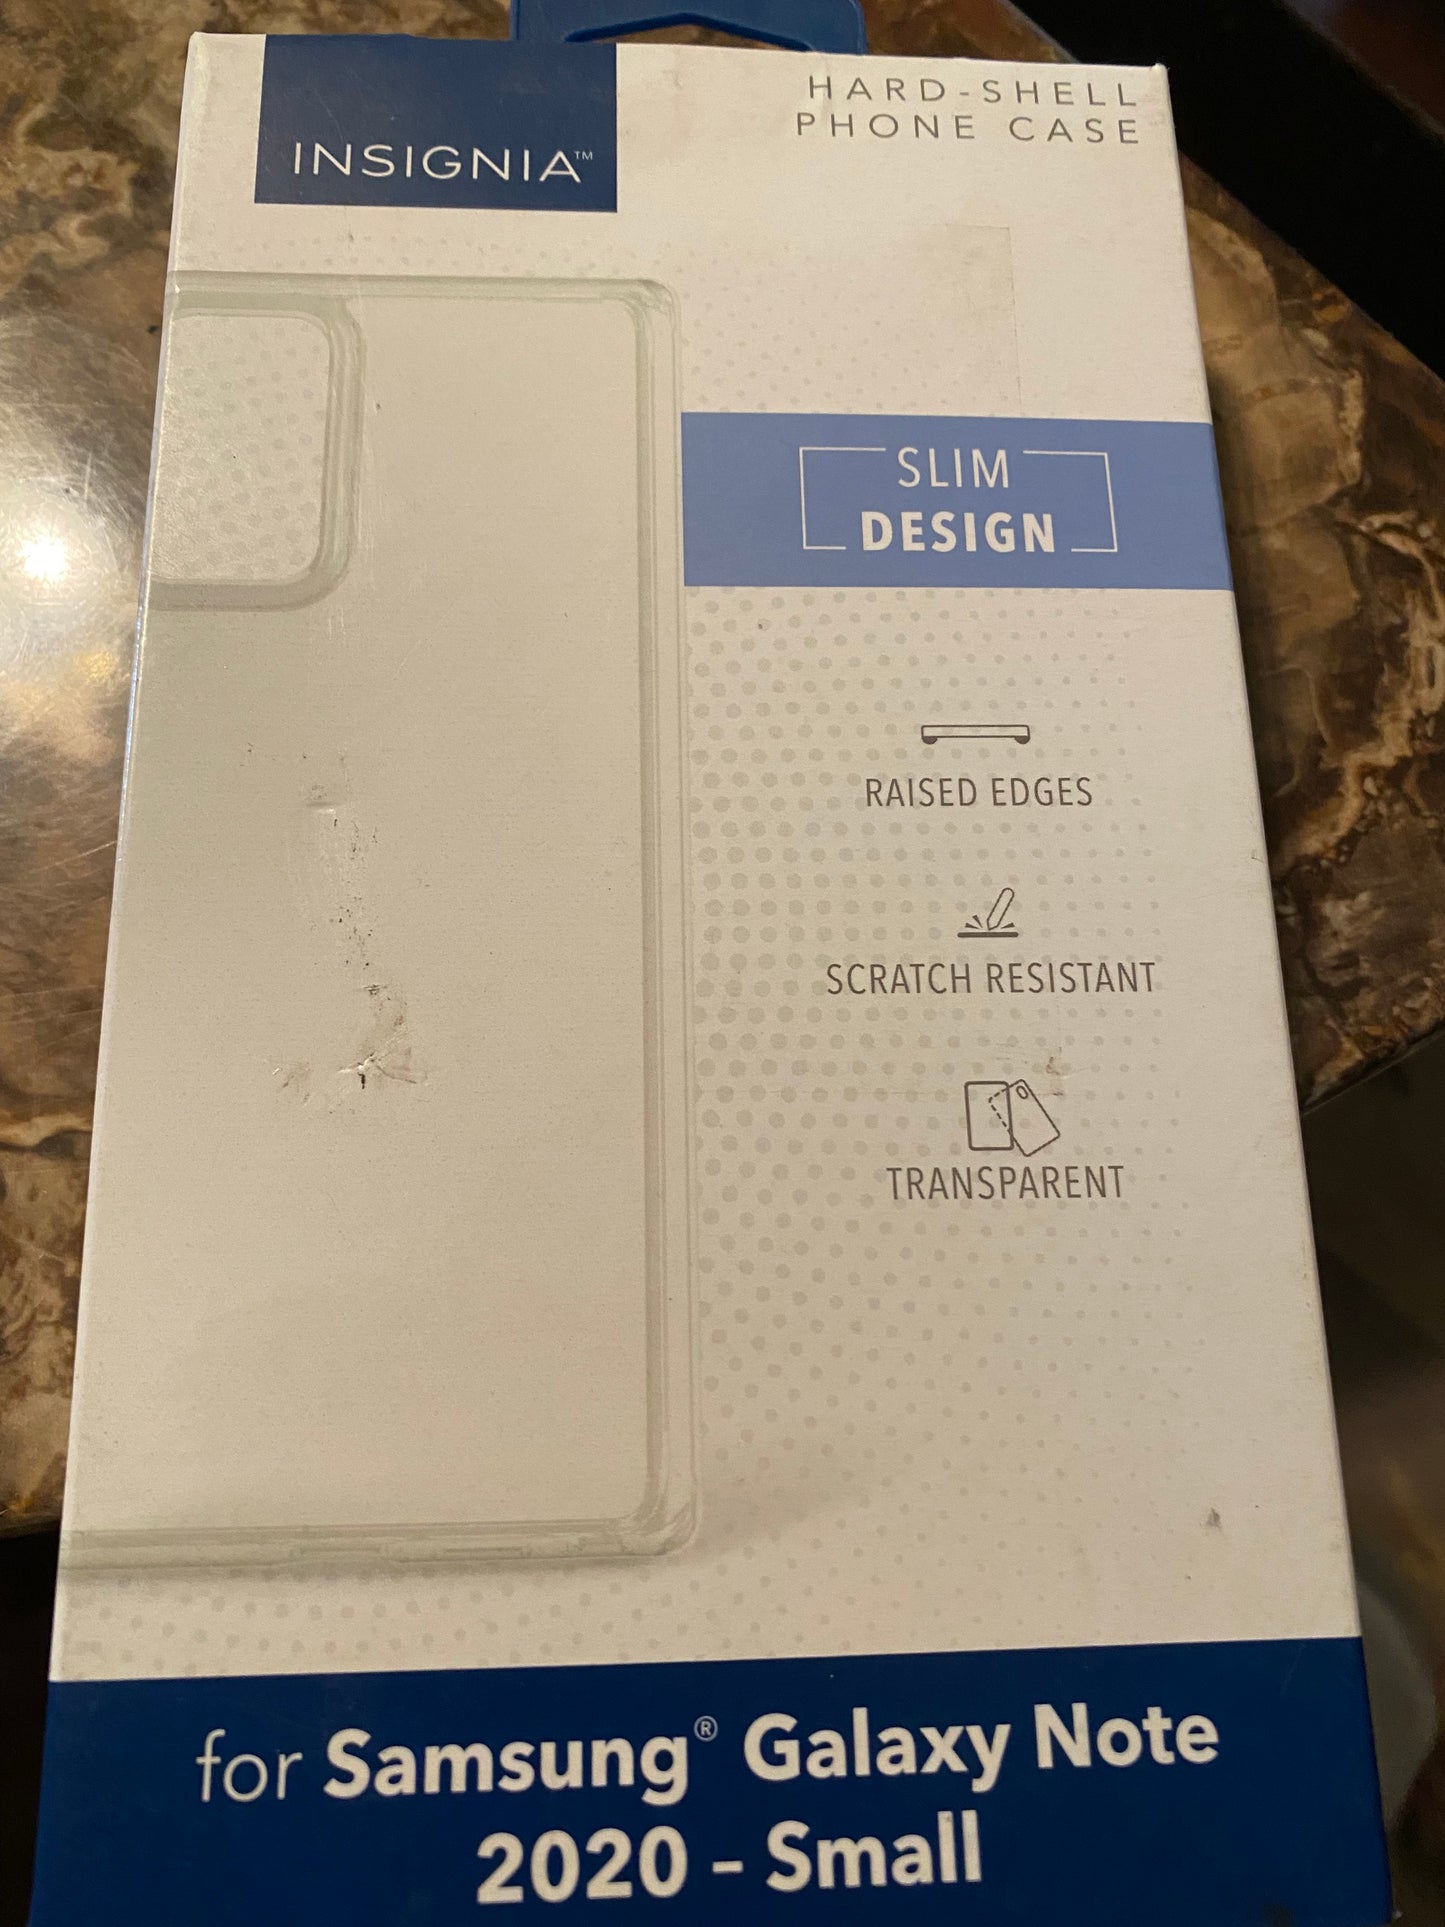 Insignia Hard Shell Phone Case Slim Design for Samsung Galaxy Note 2020